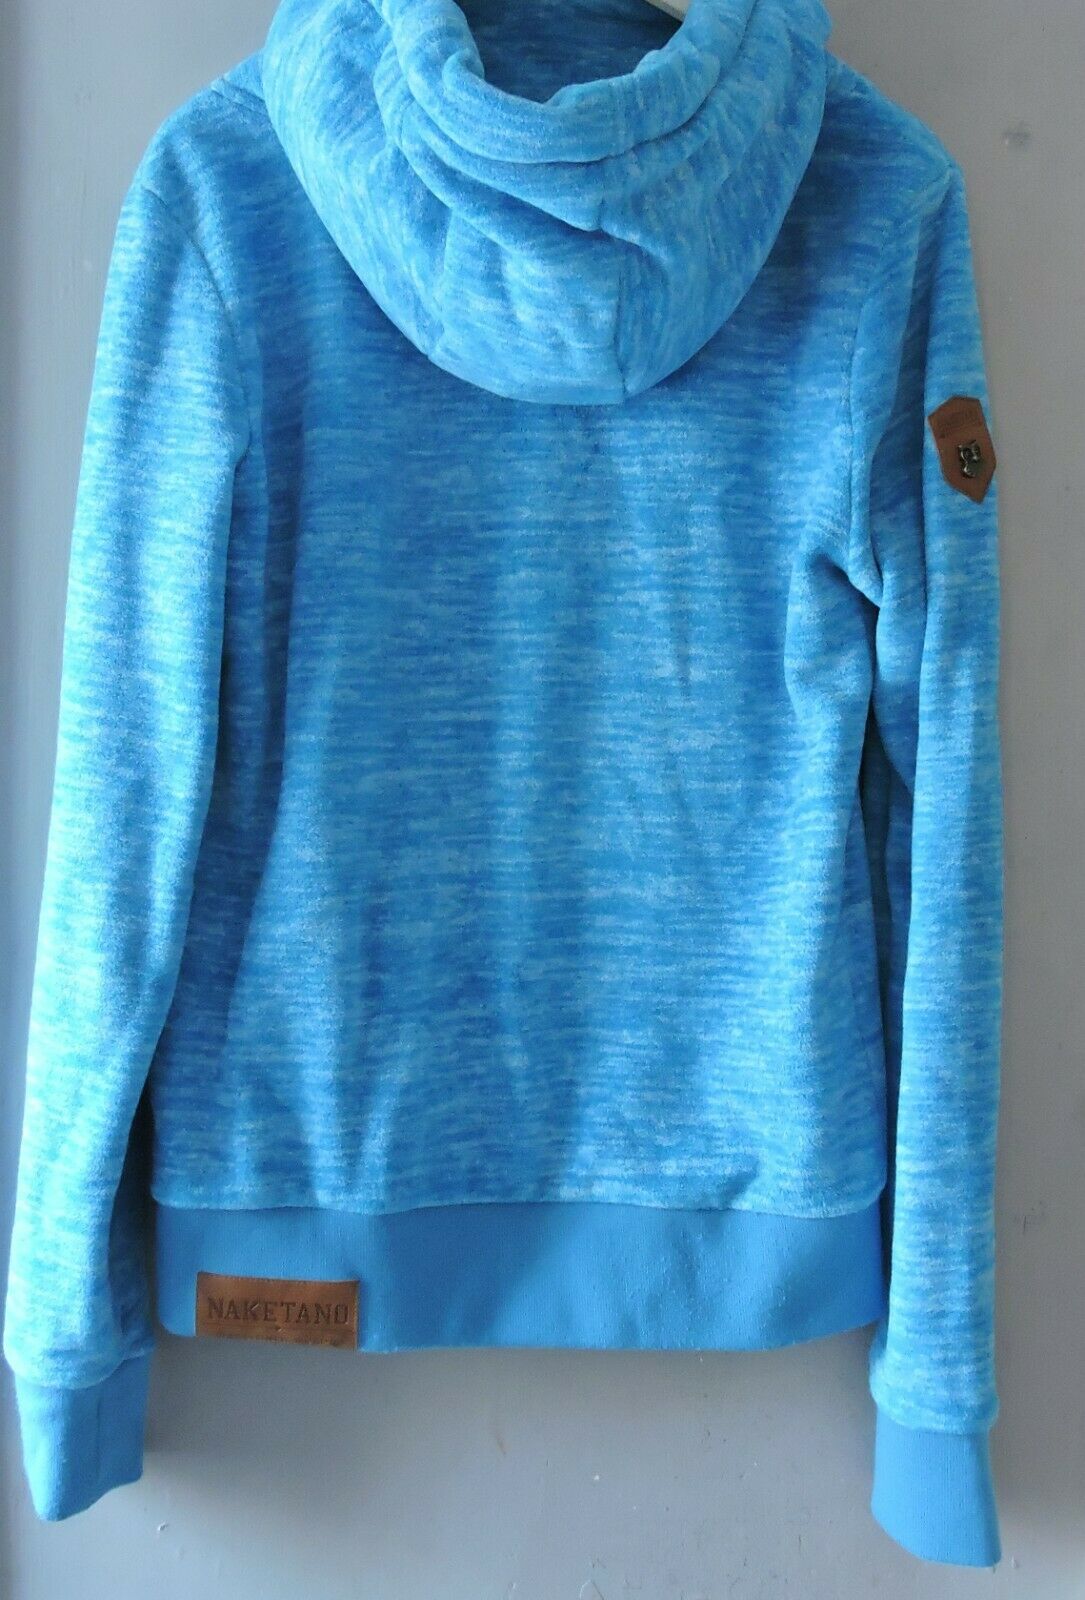 Naketano Brave New Word Thick Fleece Women Sweatshirt Hoodie Mottled Blue Size S